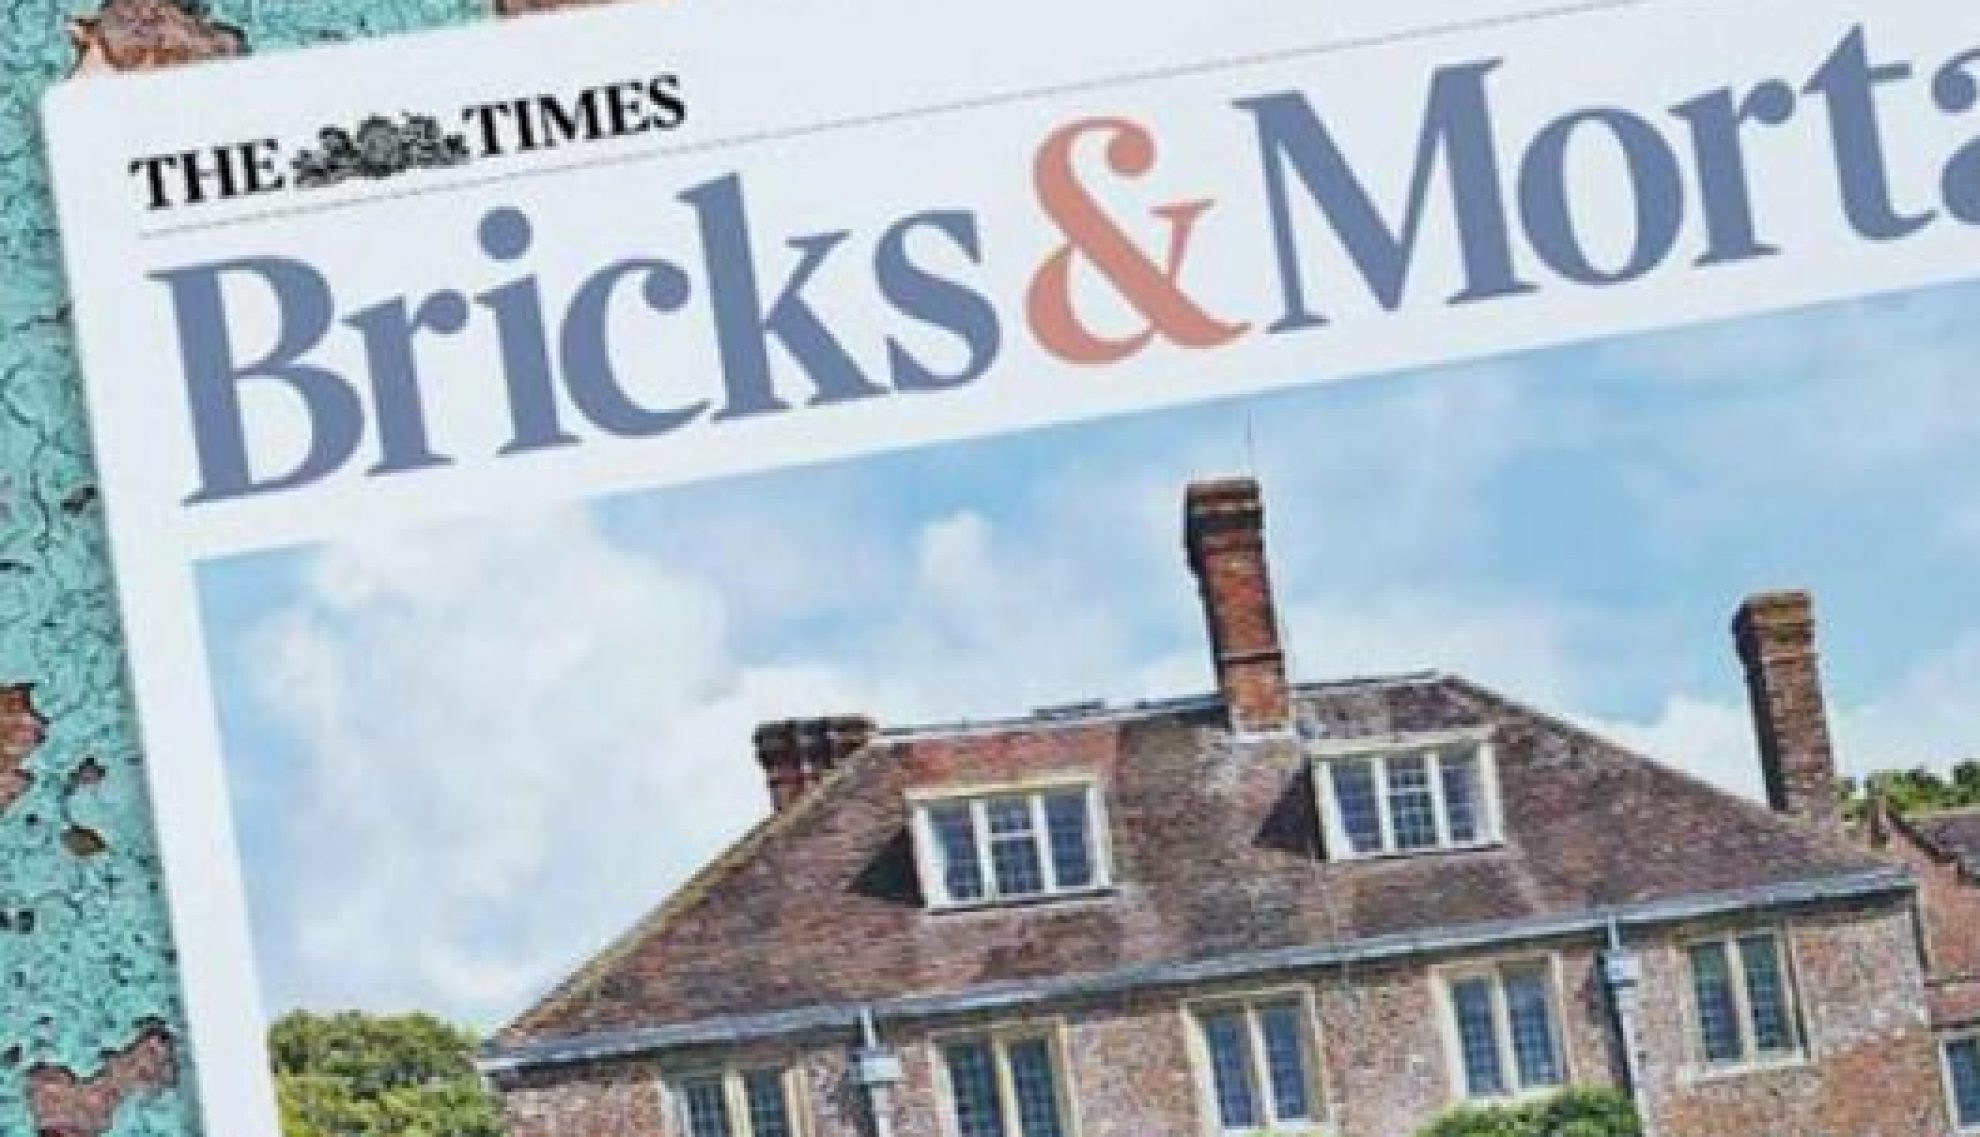 HomeViews makes its debut in The Times’ Bricks & Mortar